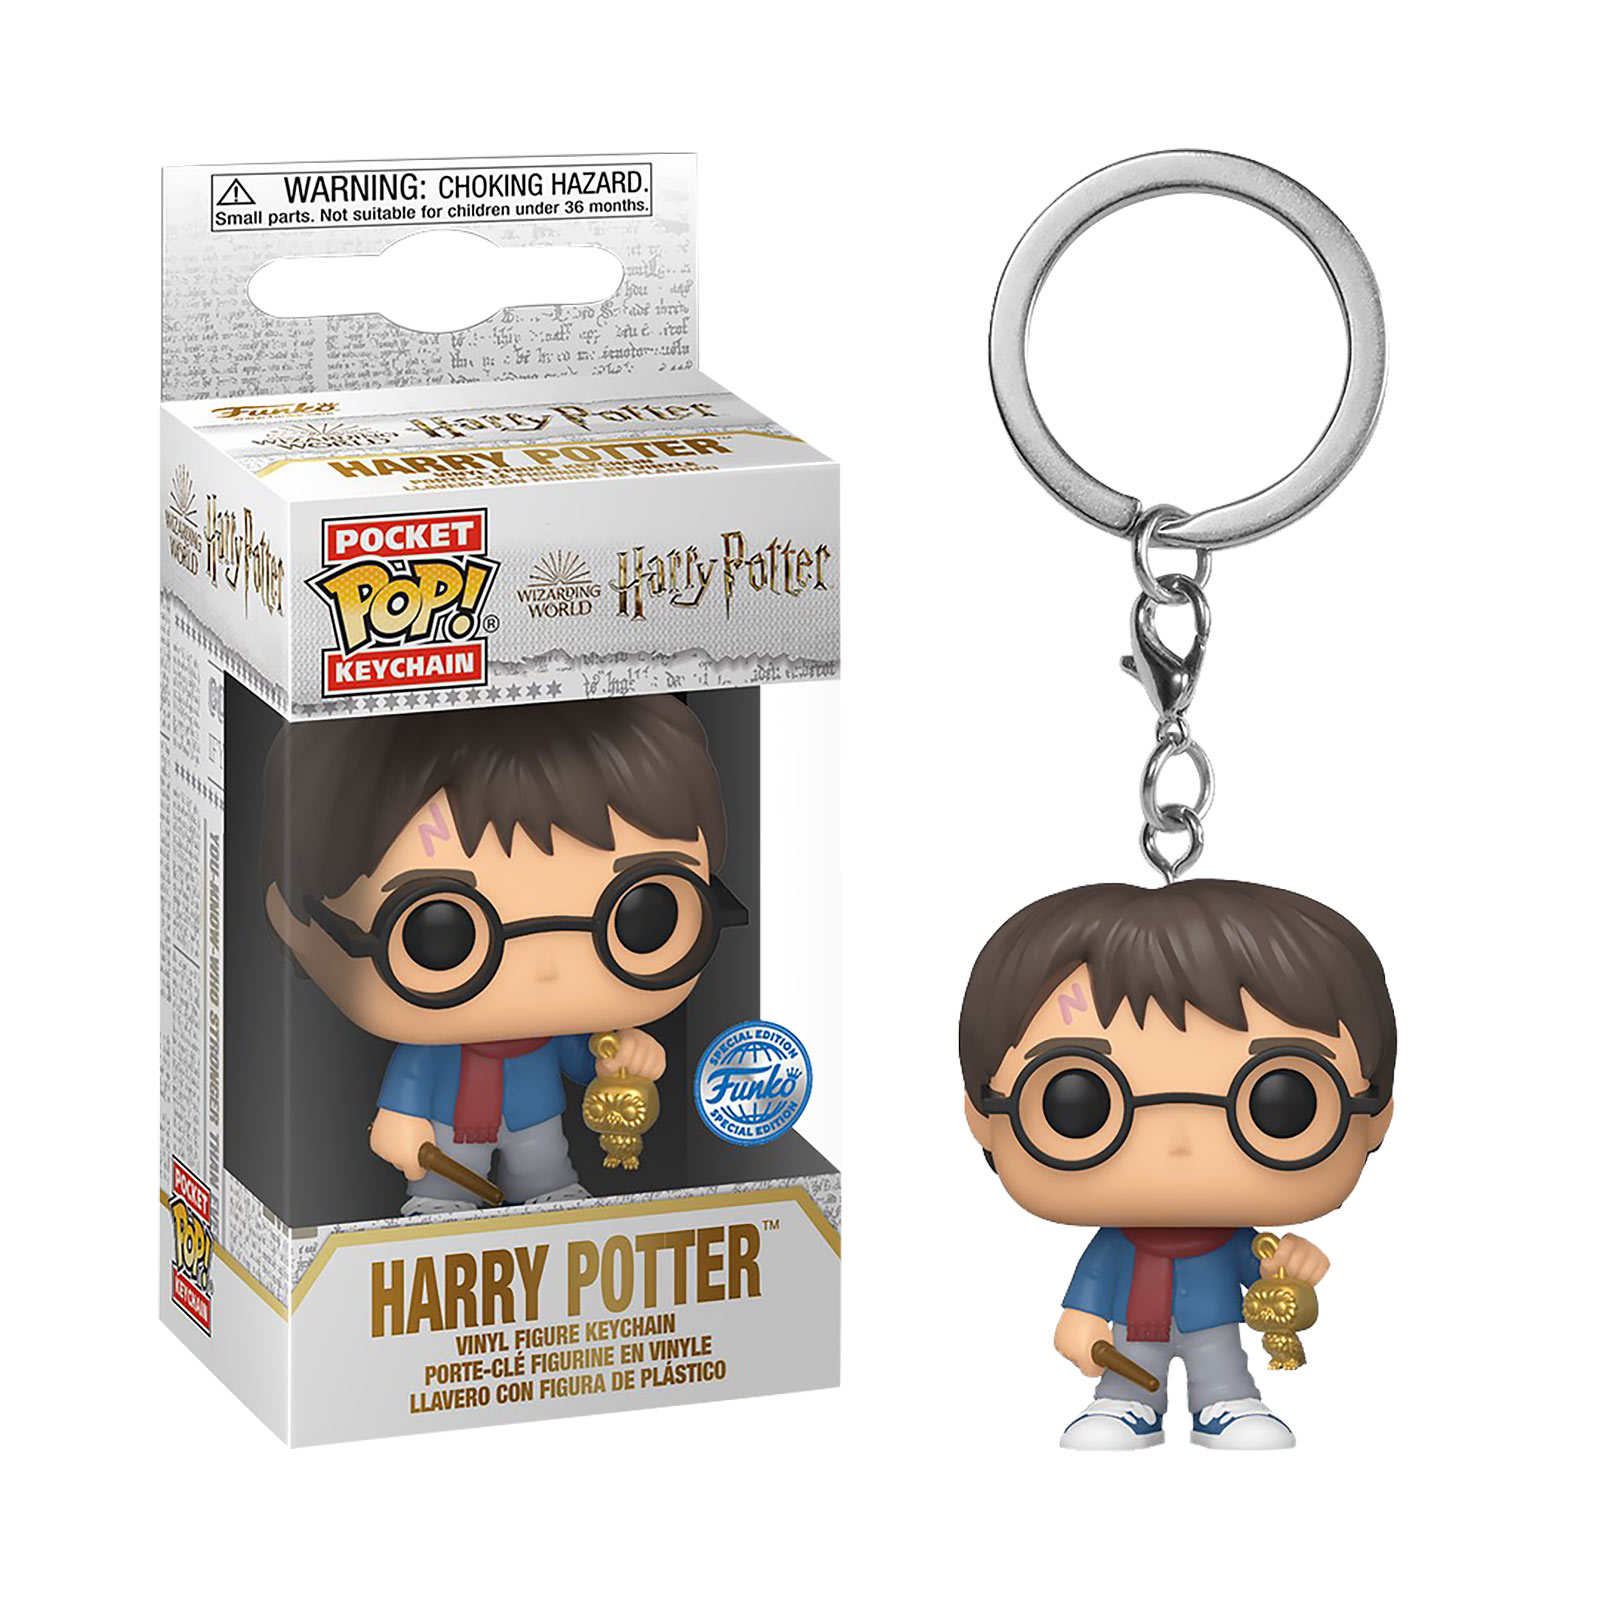 Harry Potter Holiday Funko Pop Keychain